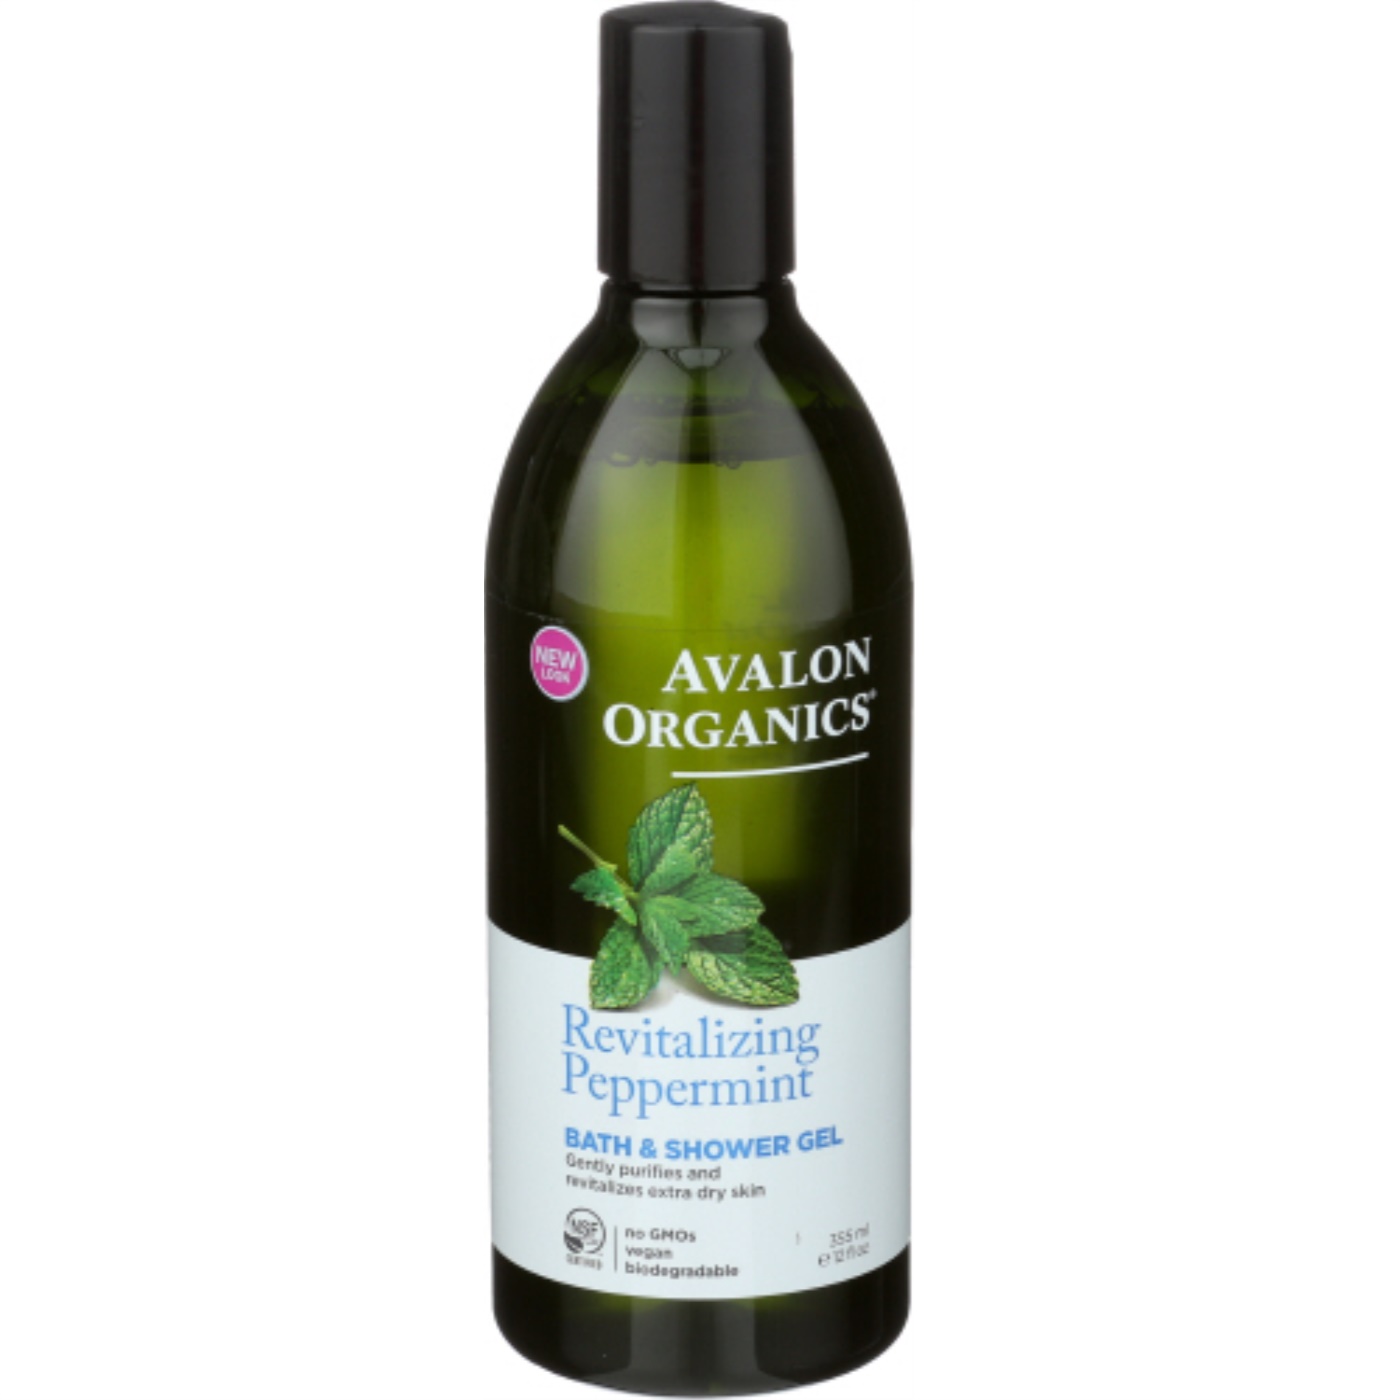 Avalon Organics Bath & Shower Gel, Revitalizing Peppermint, 12 fl oz (355 ml) - image 1 of 2